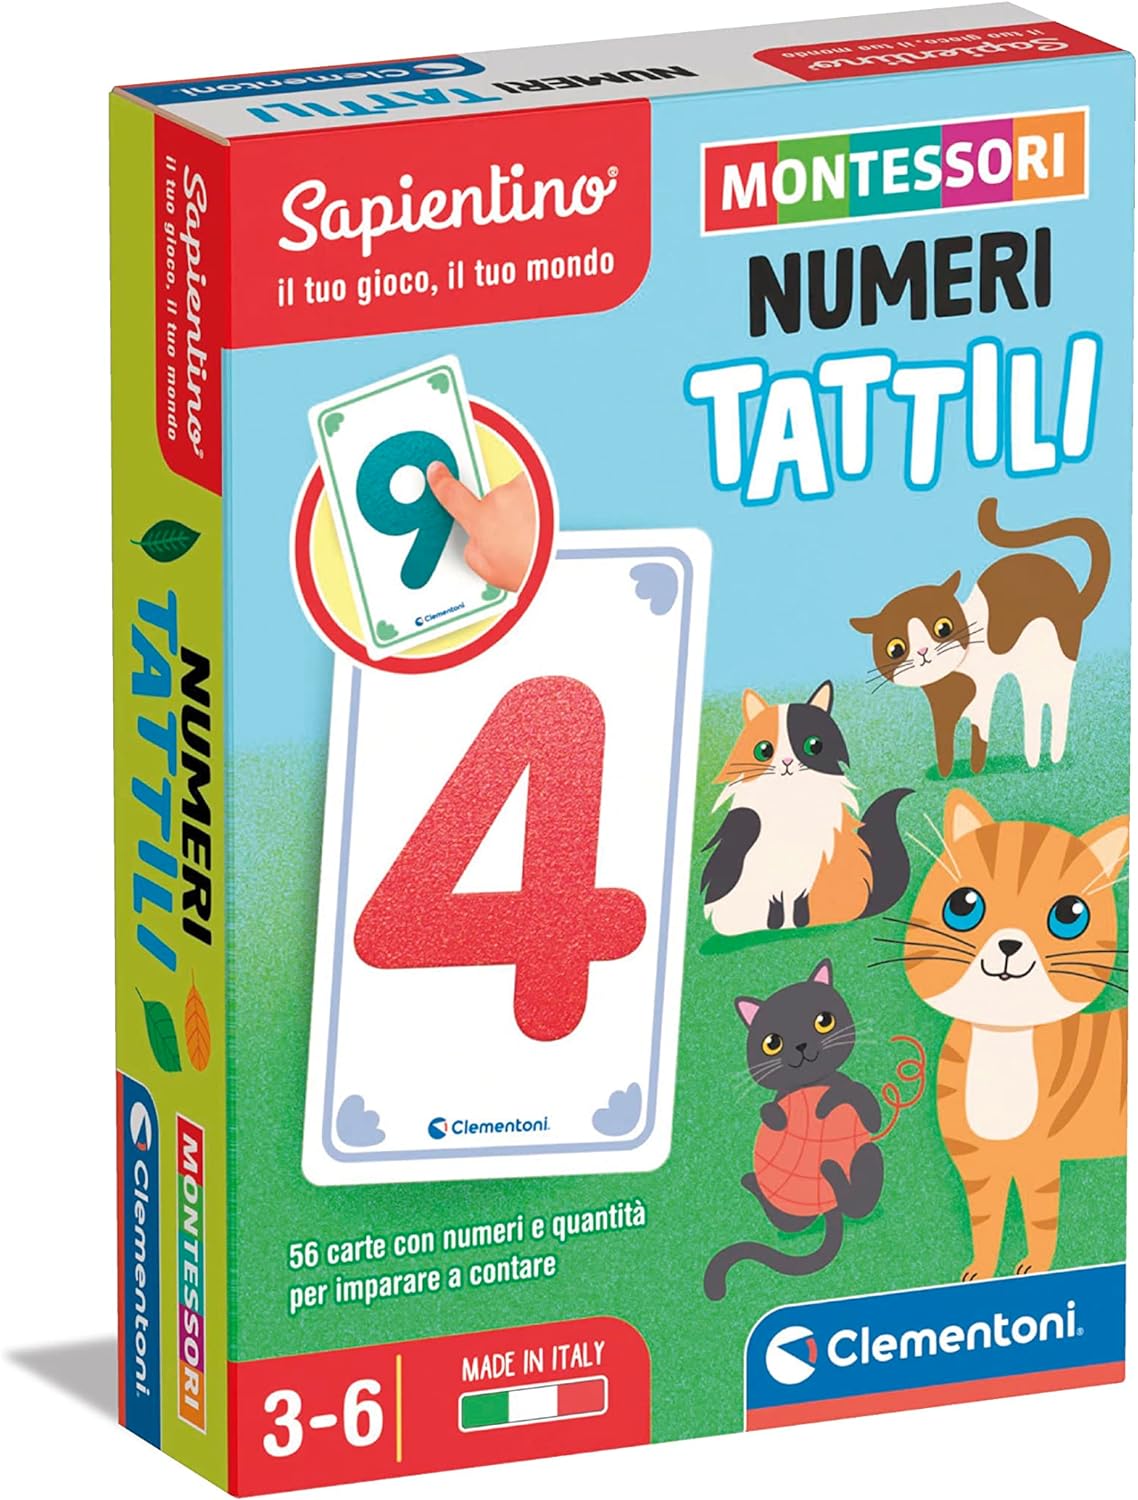 Clementoni - 16436 - Sapientino Carte - Numeri Tattili - Gioco